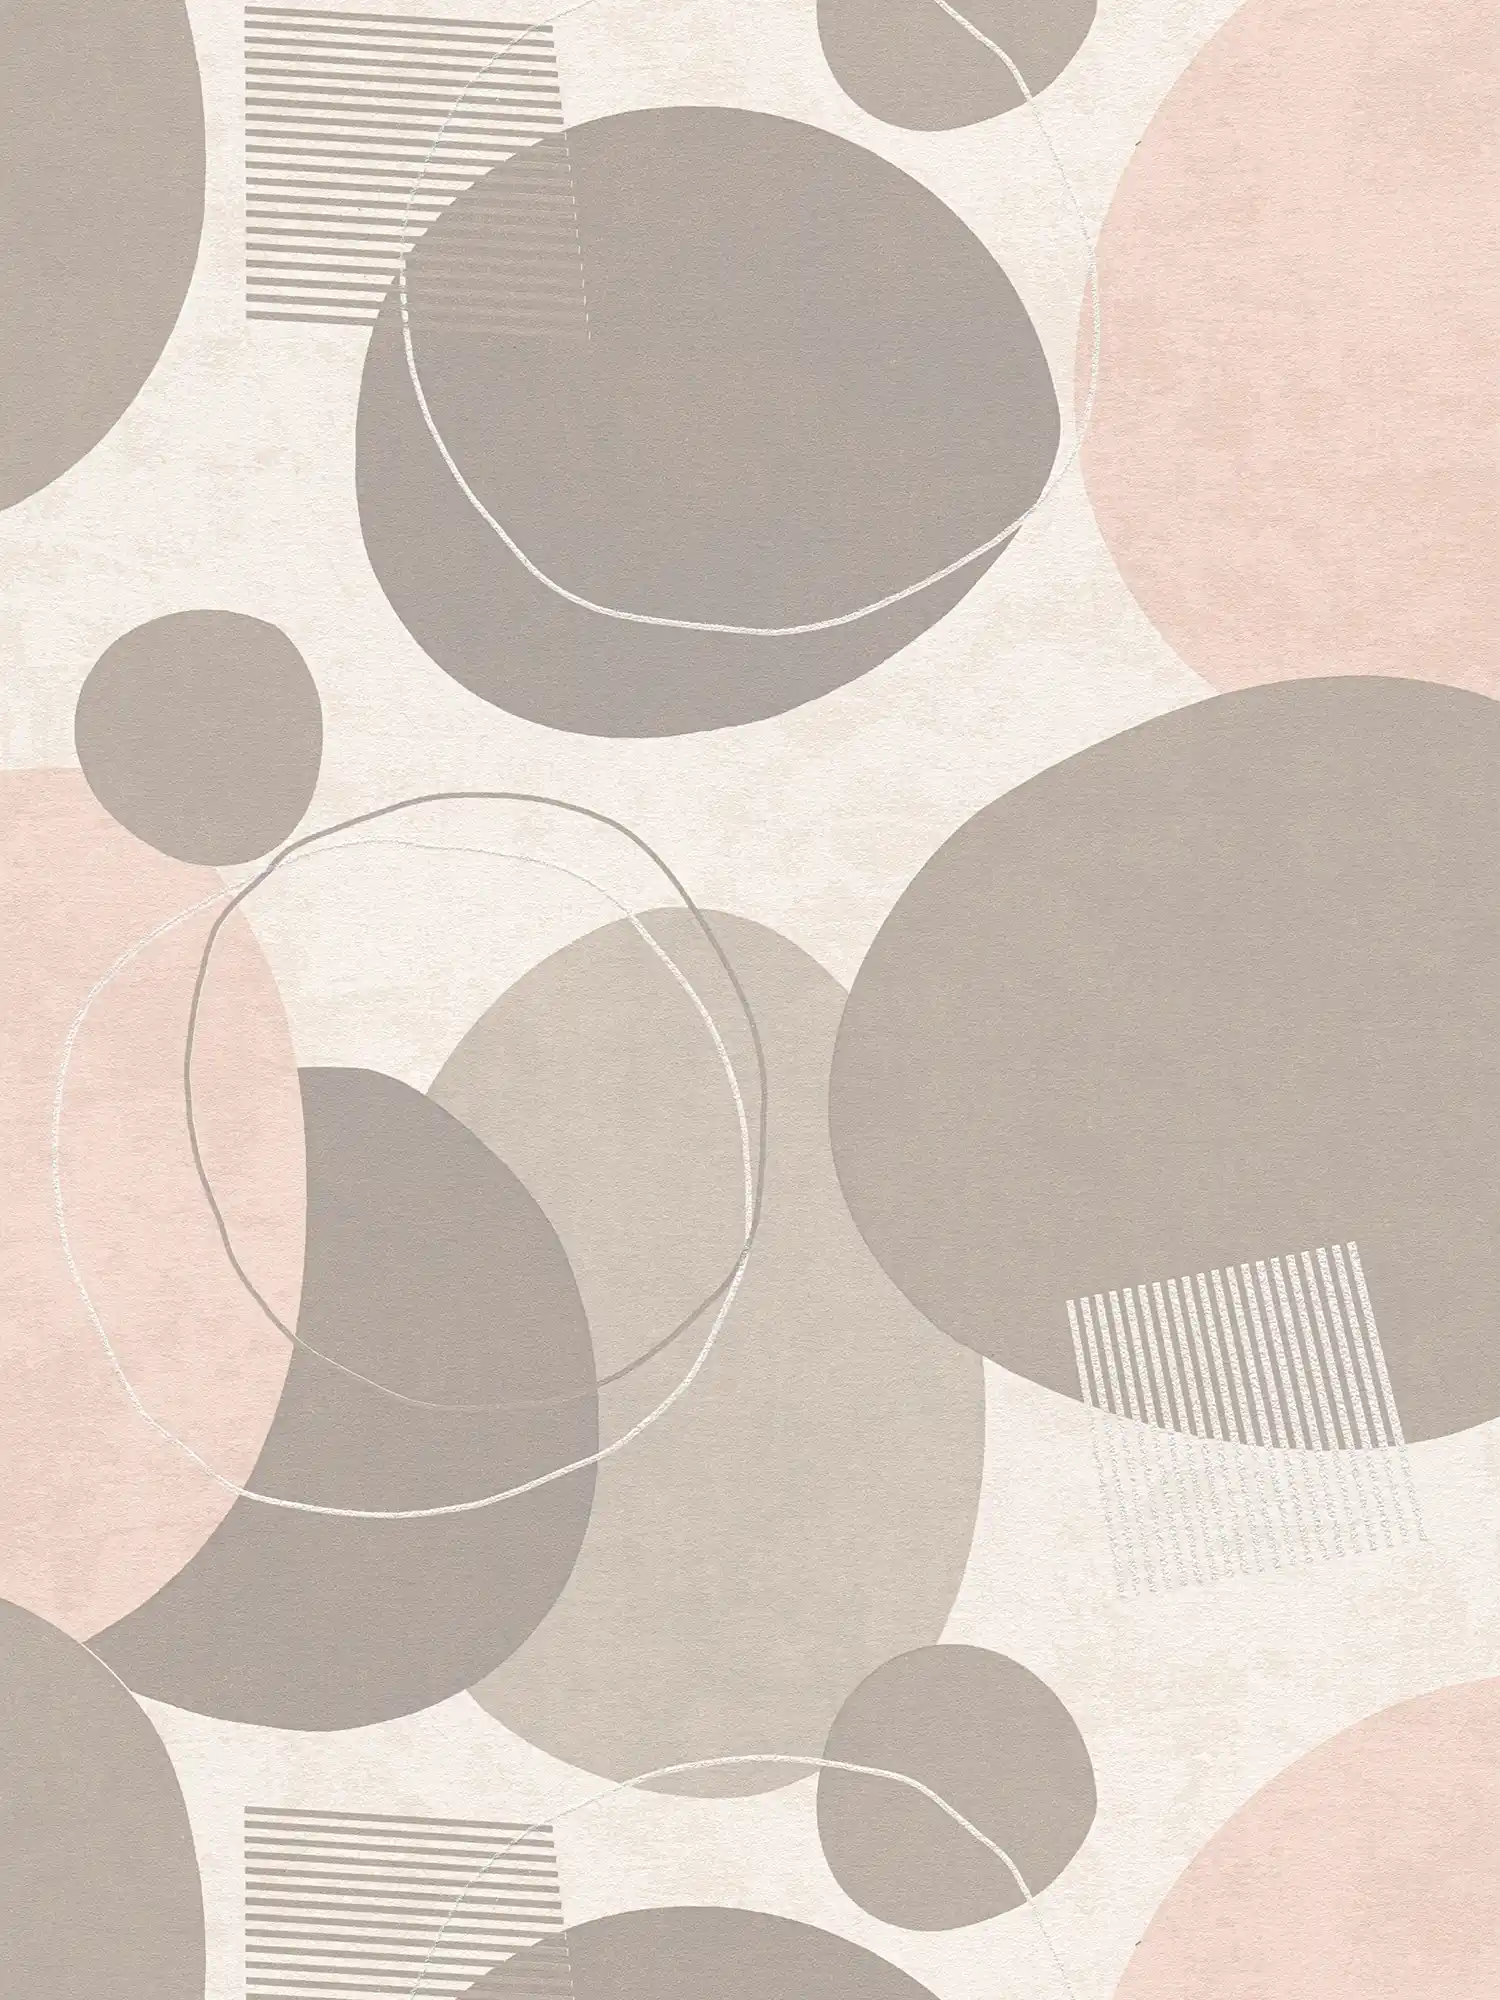 Retro Tapete Mid Century Modern Muster – Beige, Rosa, Creme
